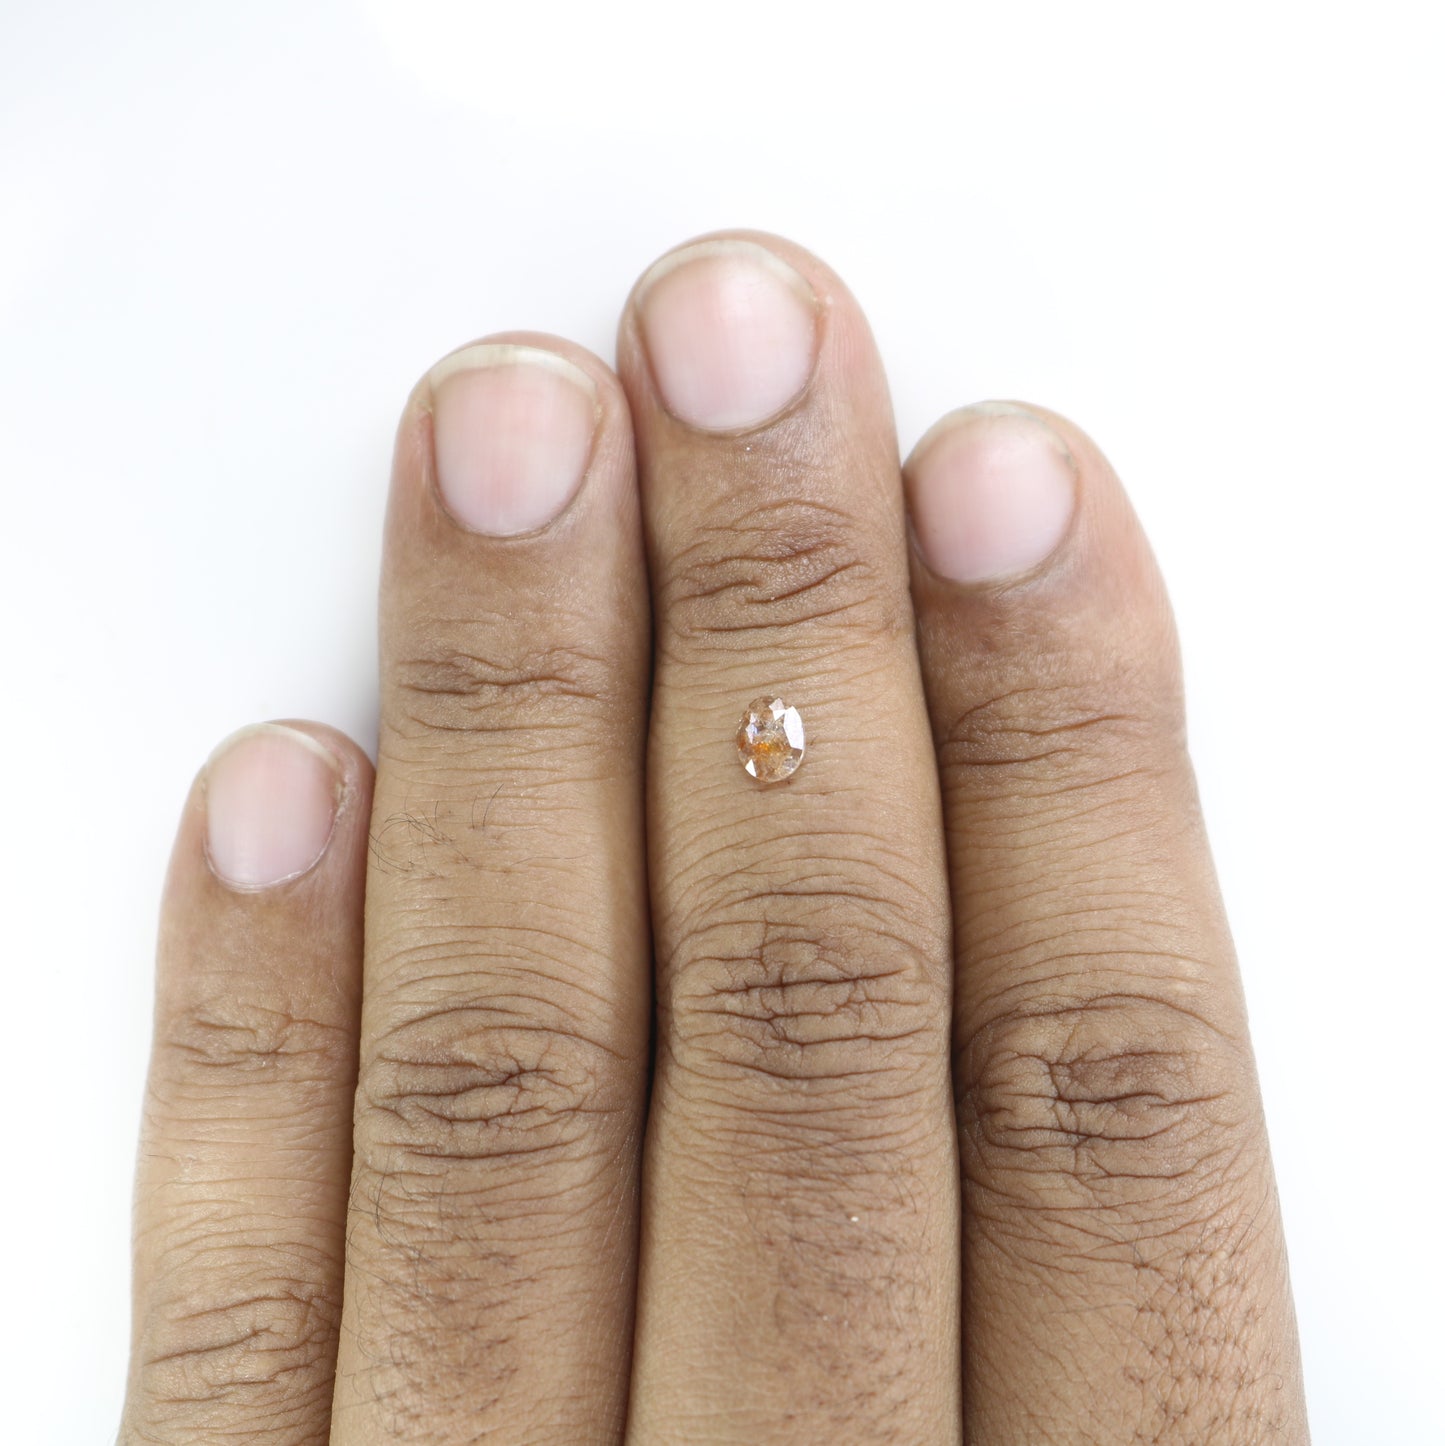 0.33 CT Peach  Oval Shape Diamond For Engagement Ring | Customize Handmade Oval Diamond Jewelry